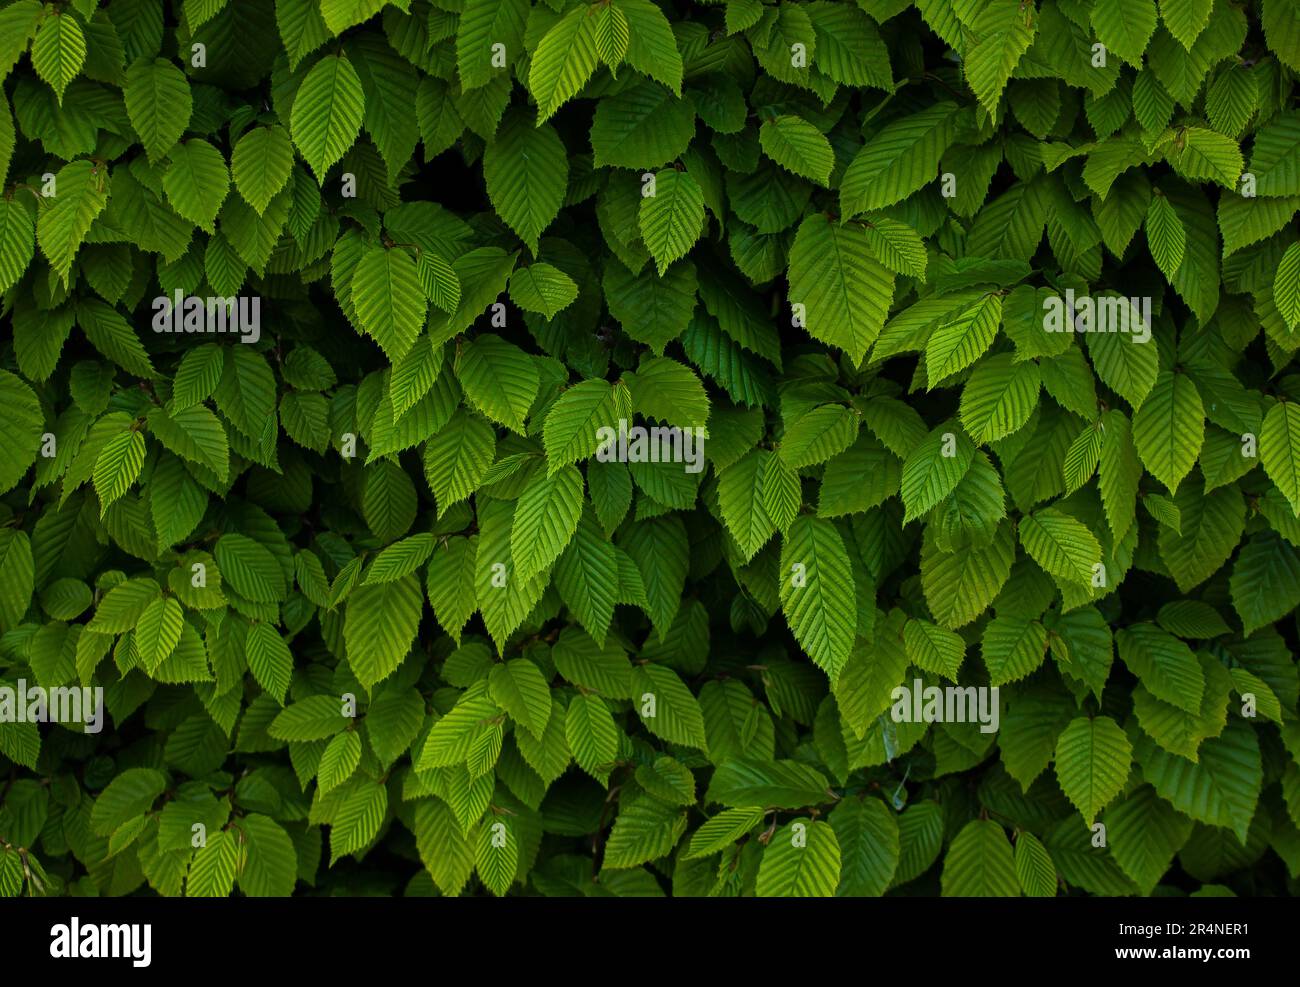 Ulmus pumila celer leaves, European hornbeam or carpinus betulus in the garden. Green leaf pattern with sunlight, Nature texture or background. Stock Photo